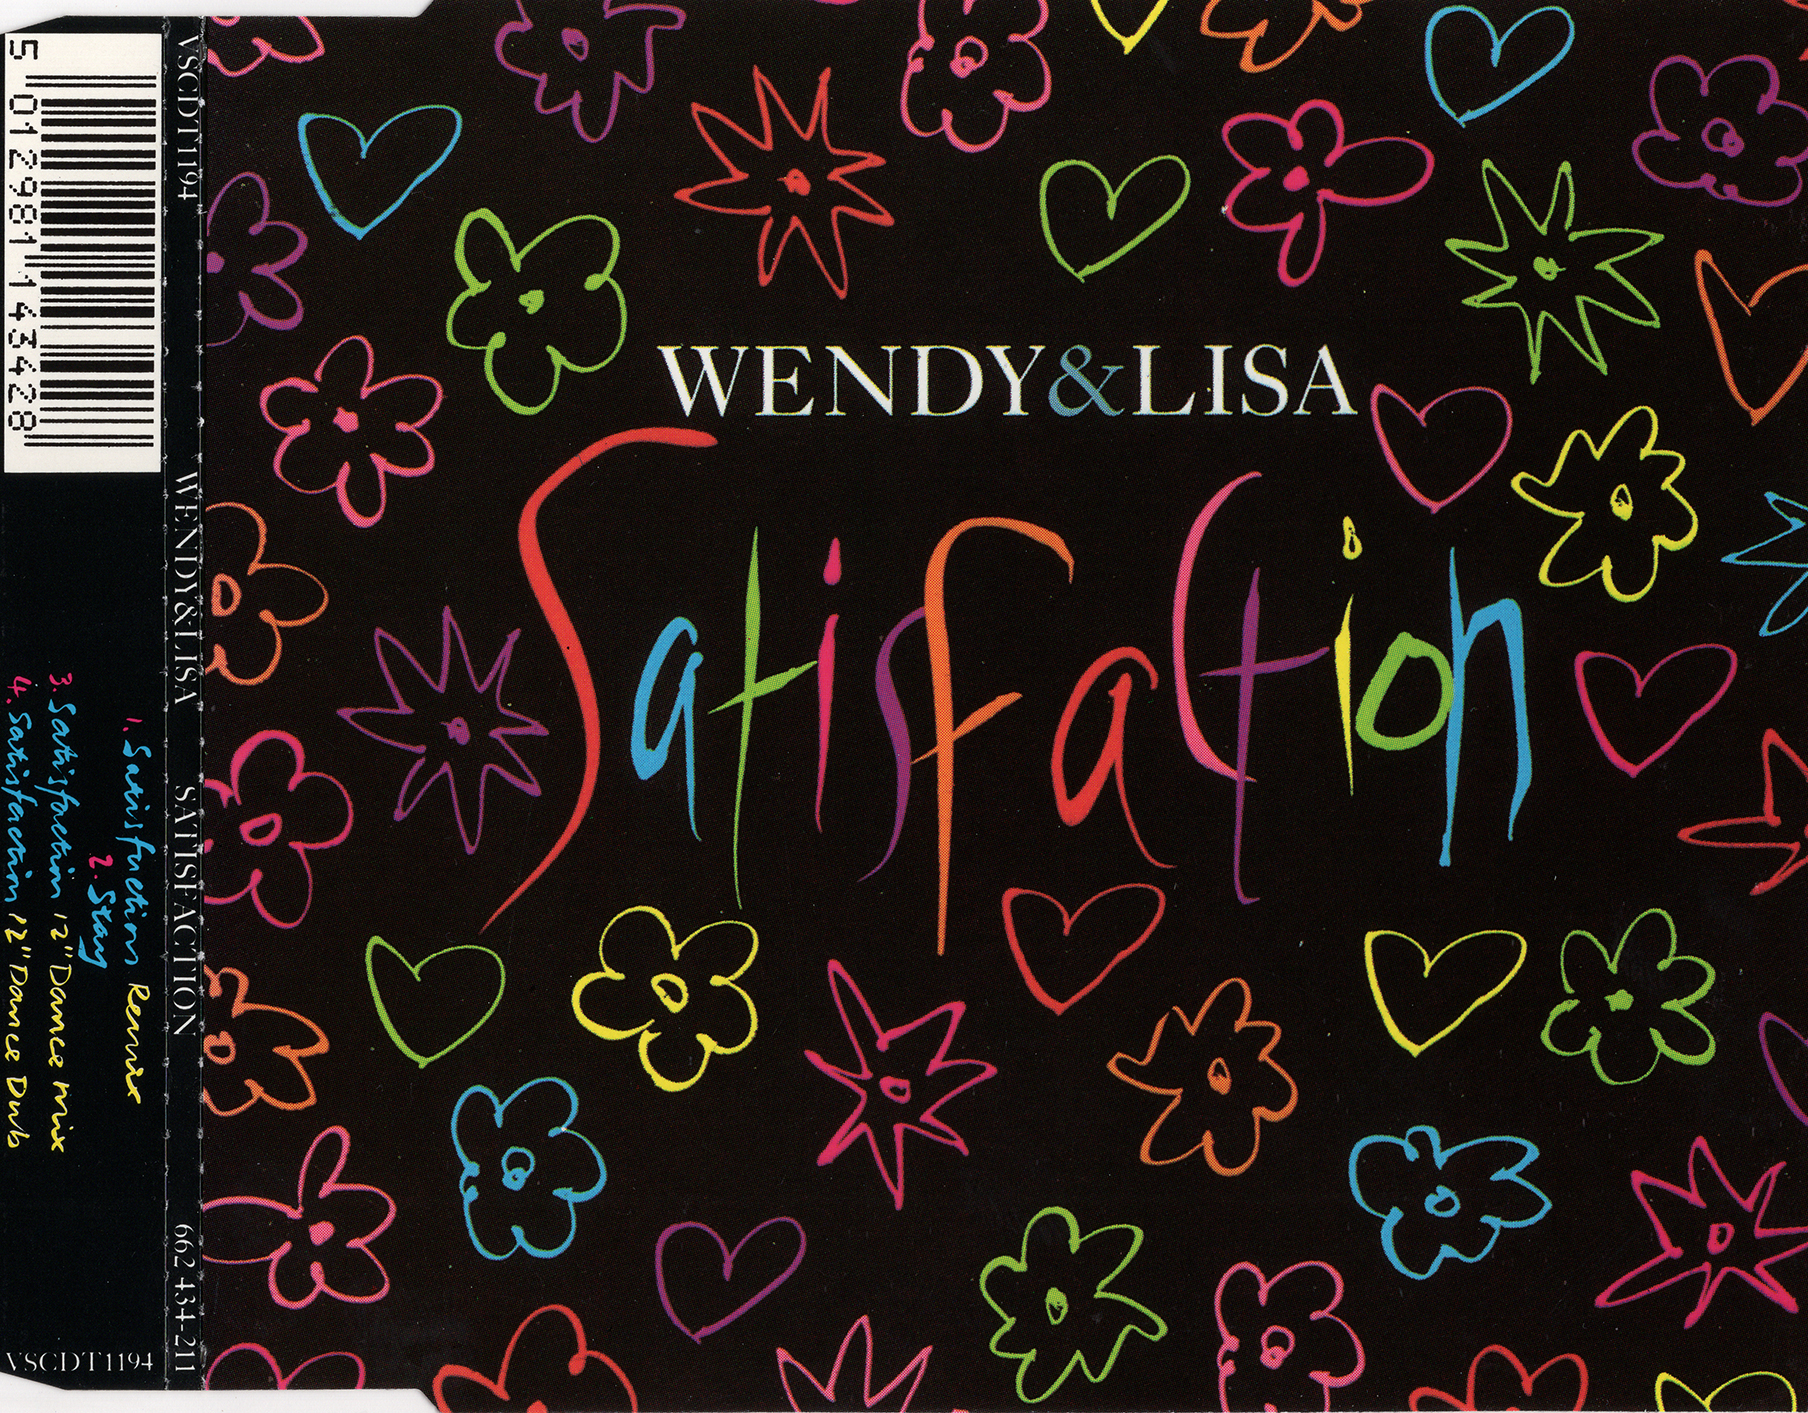 Wendy & Lisa - Satisfaction (Cdm)[1989]